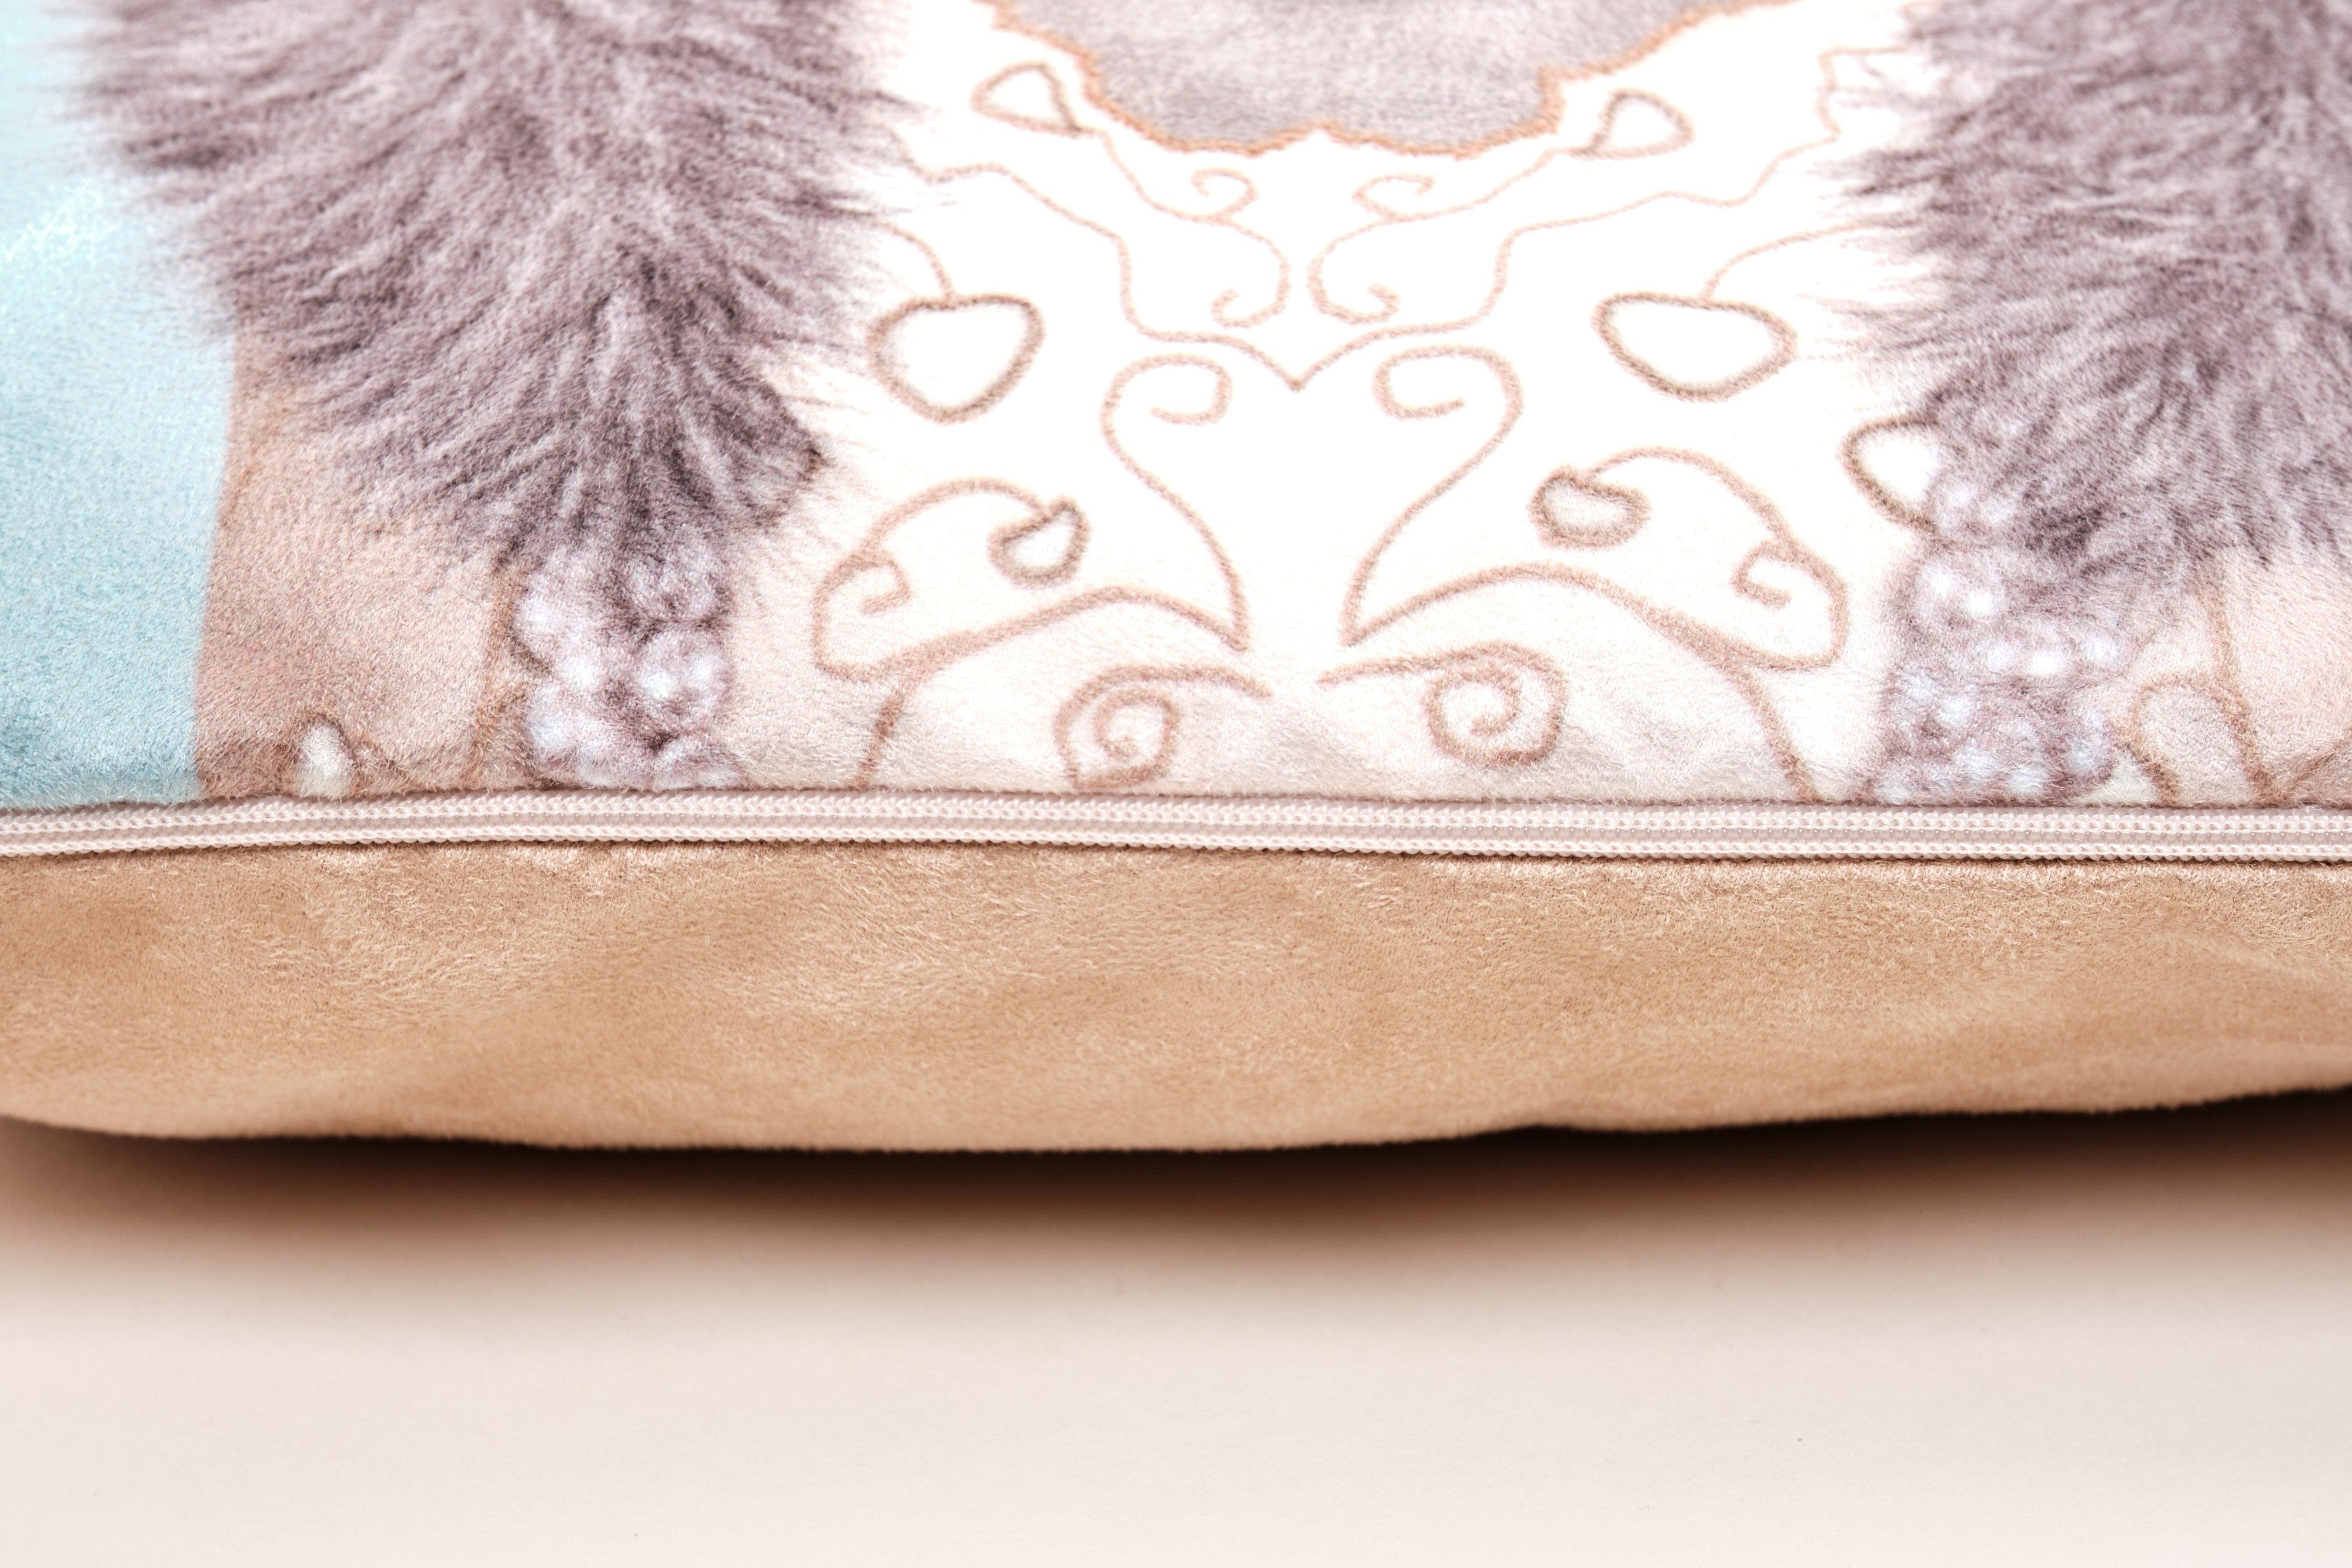 I Love You! Potato Print - Paperlollipop Cushion - Handmade Cushions UK - WeLoveCushions